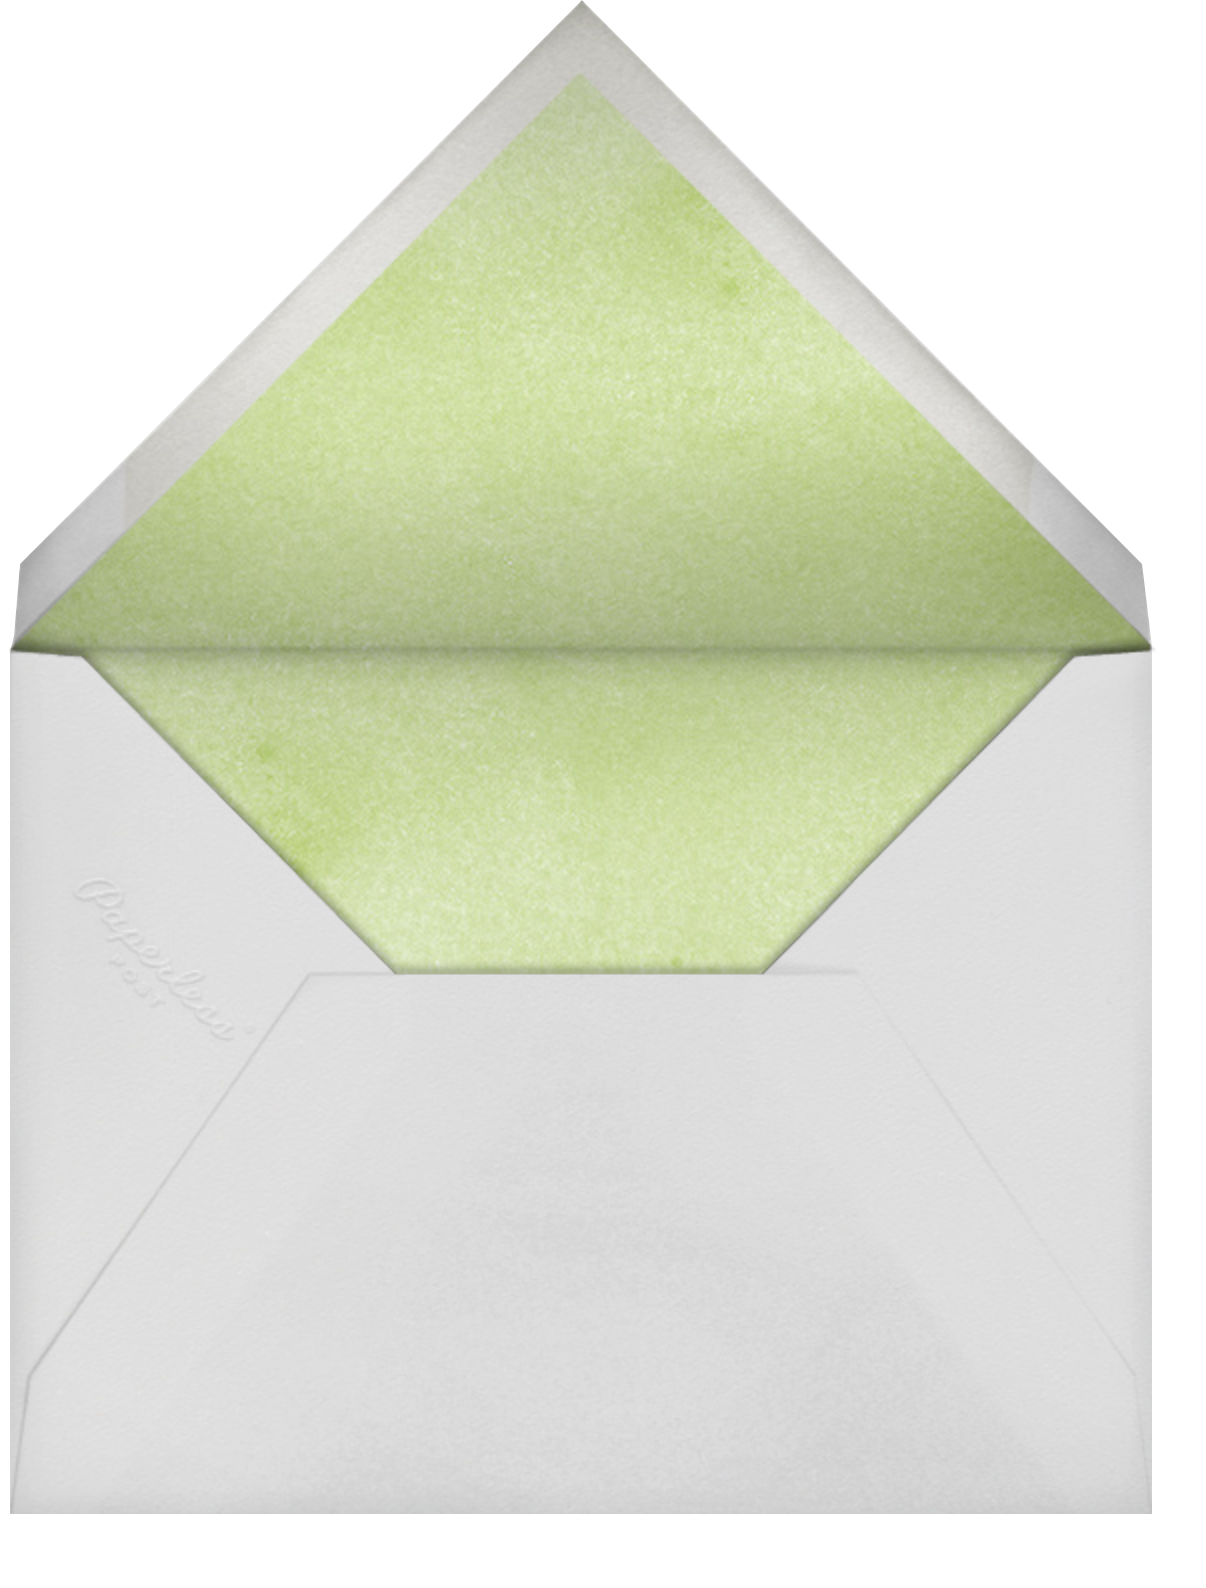 Balmoral (Stationery) - Paperless Post - Envelope